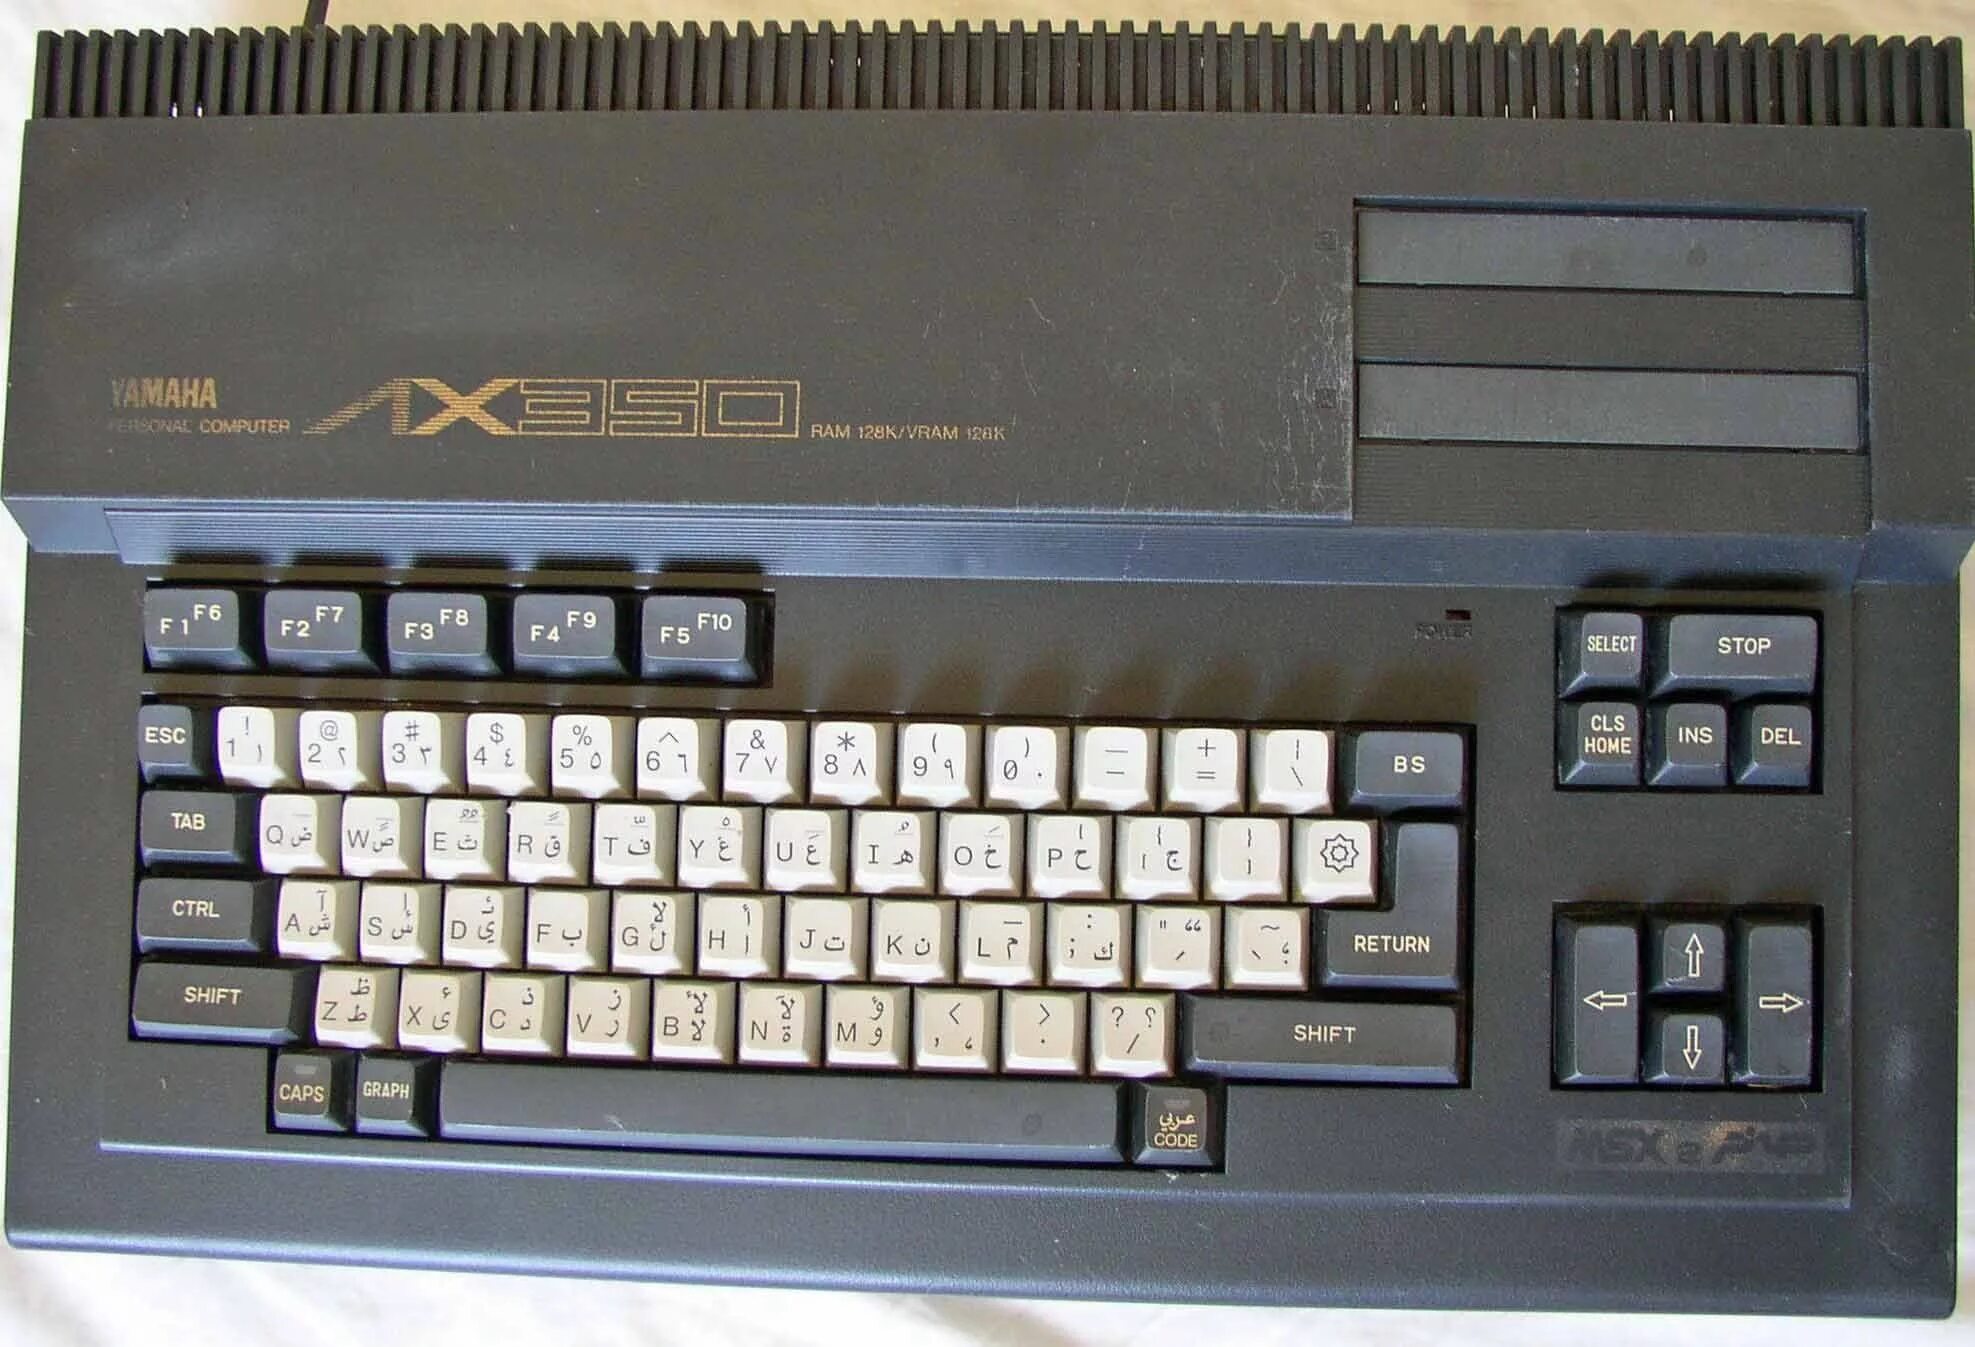 Ardor gaming msx3. Yamaha msx2. Yamaha кувт2. Yamaha MSX компьютеры. Yamaha AX-350.